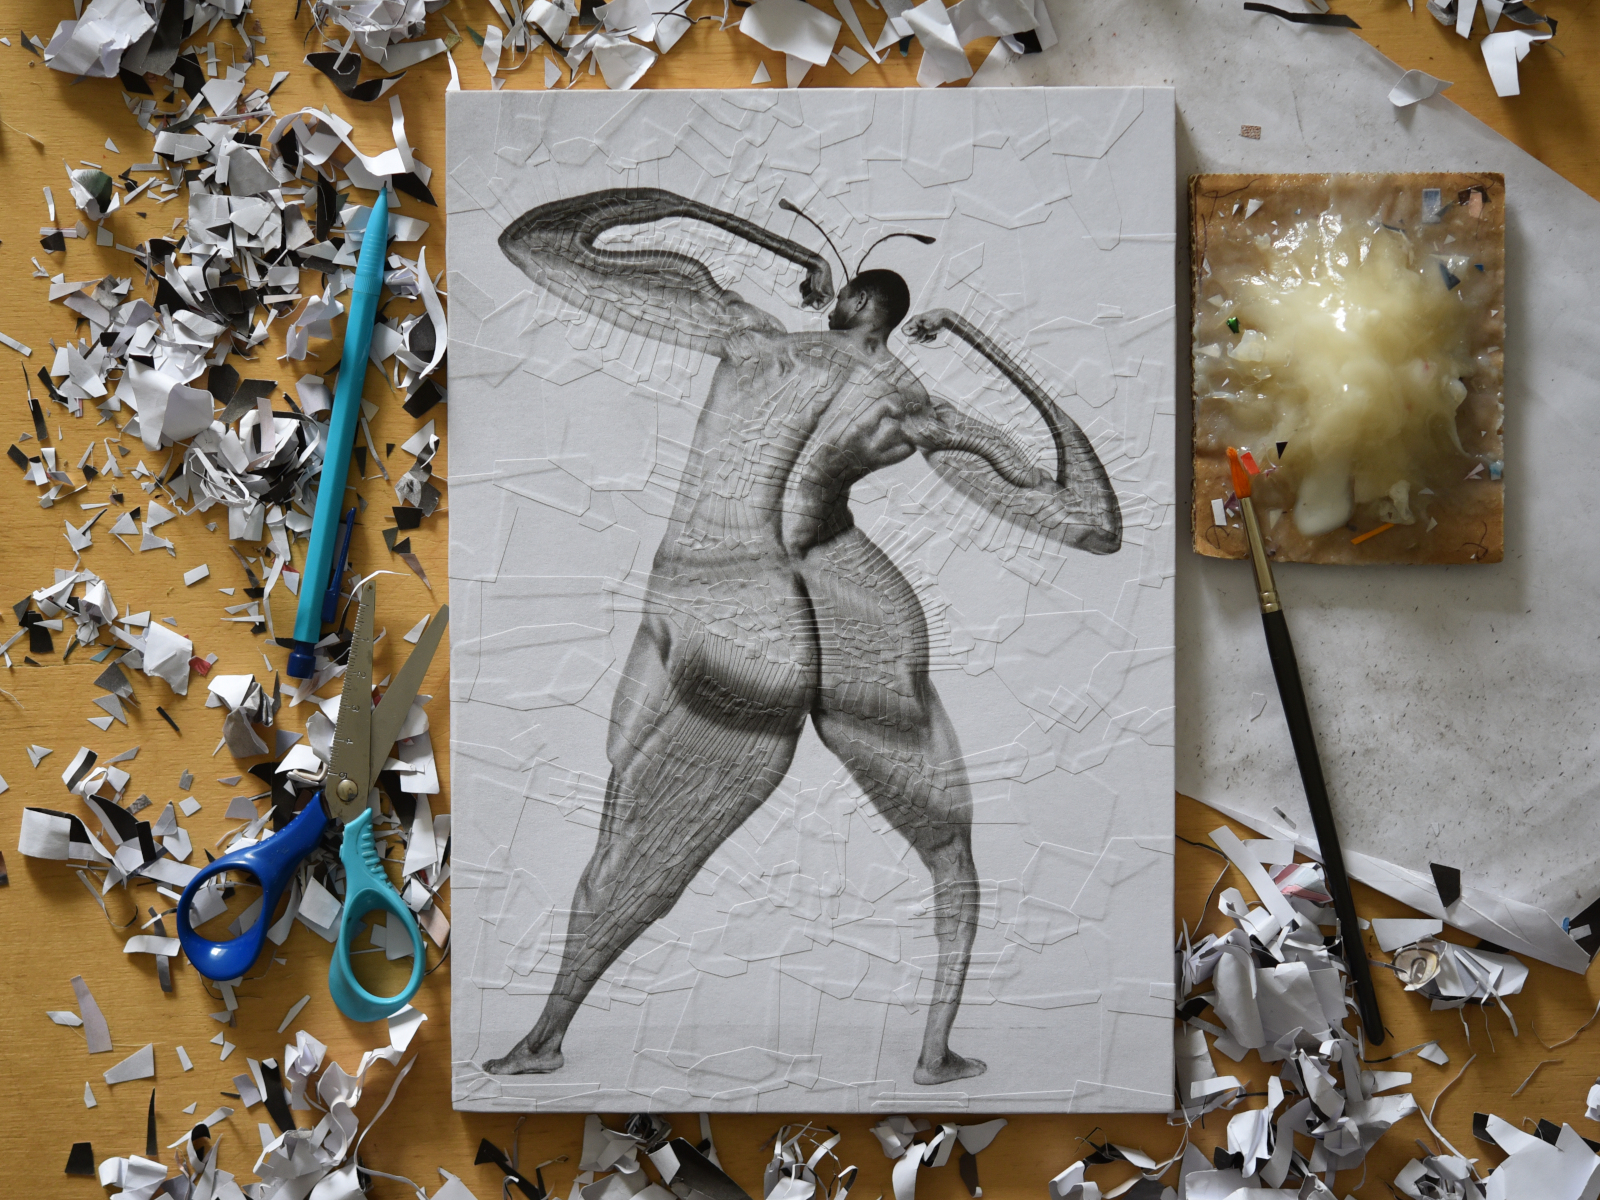 Butterfly after Alonzo Hanagan, studio alonzo hanagan collage illustration naked nude studio